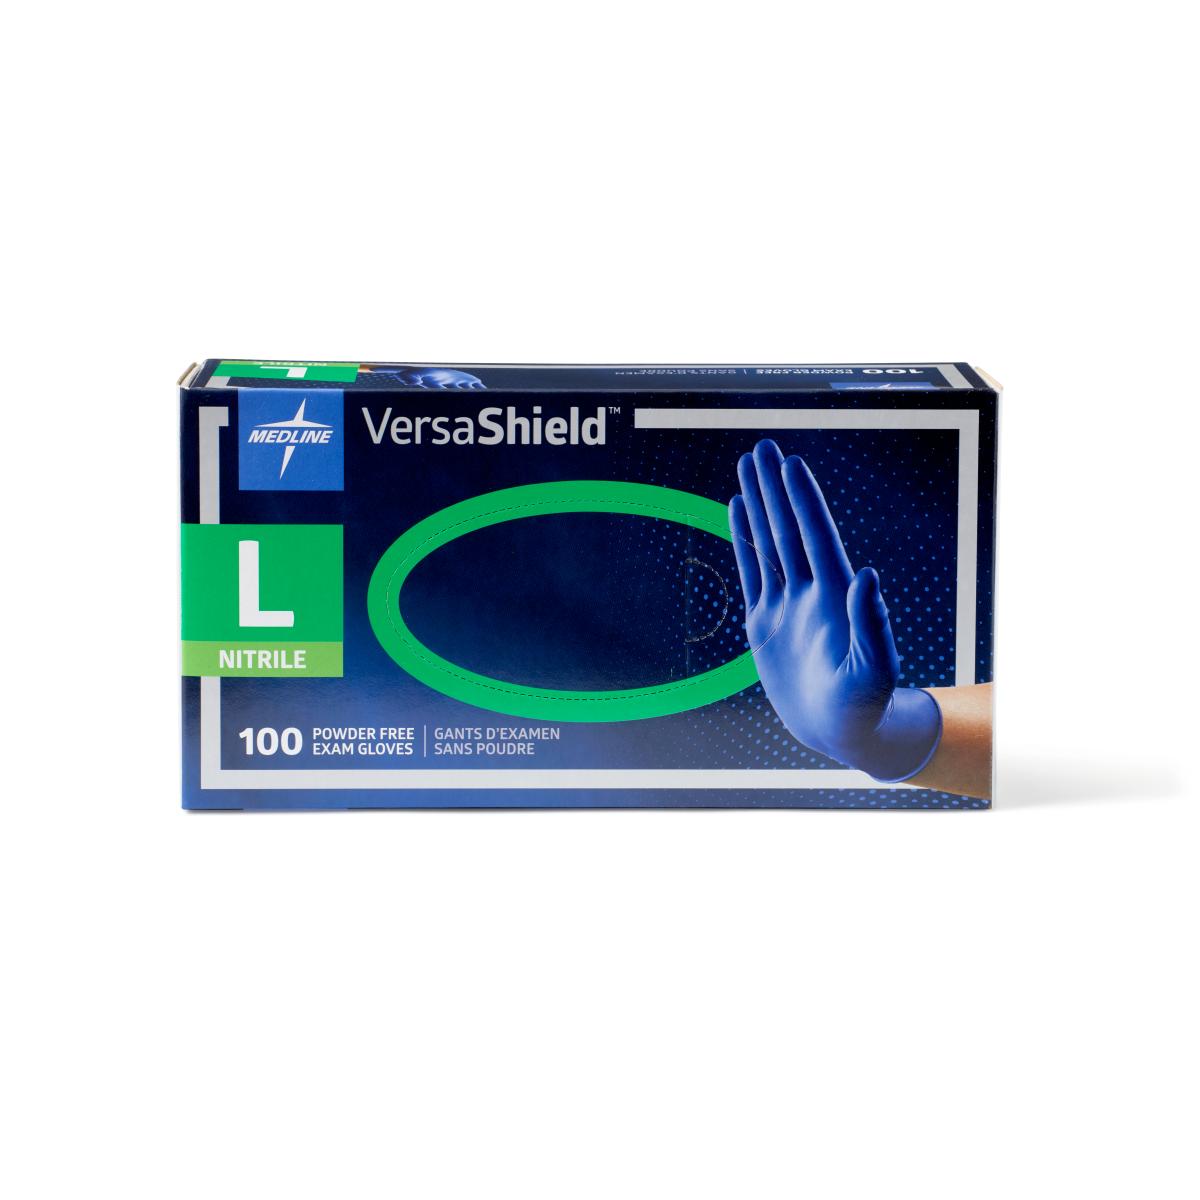 Versashield brand blue gloves in blue box - large size